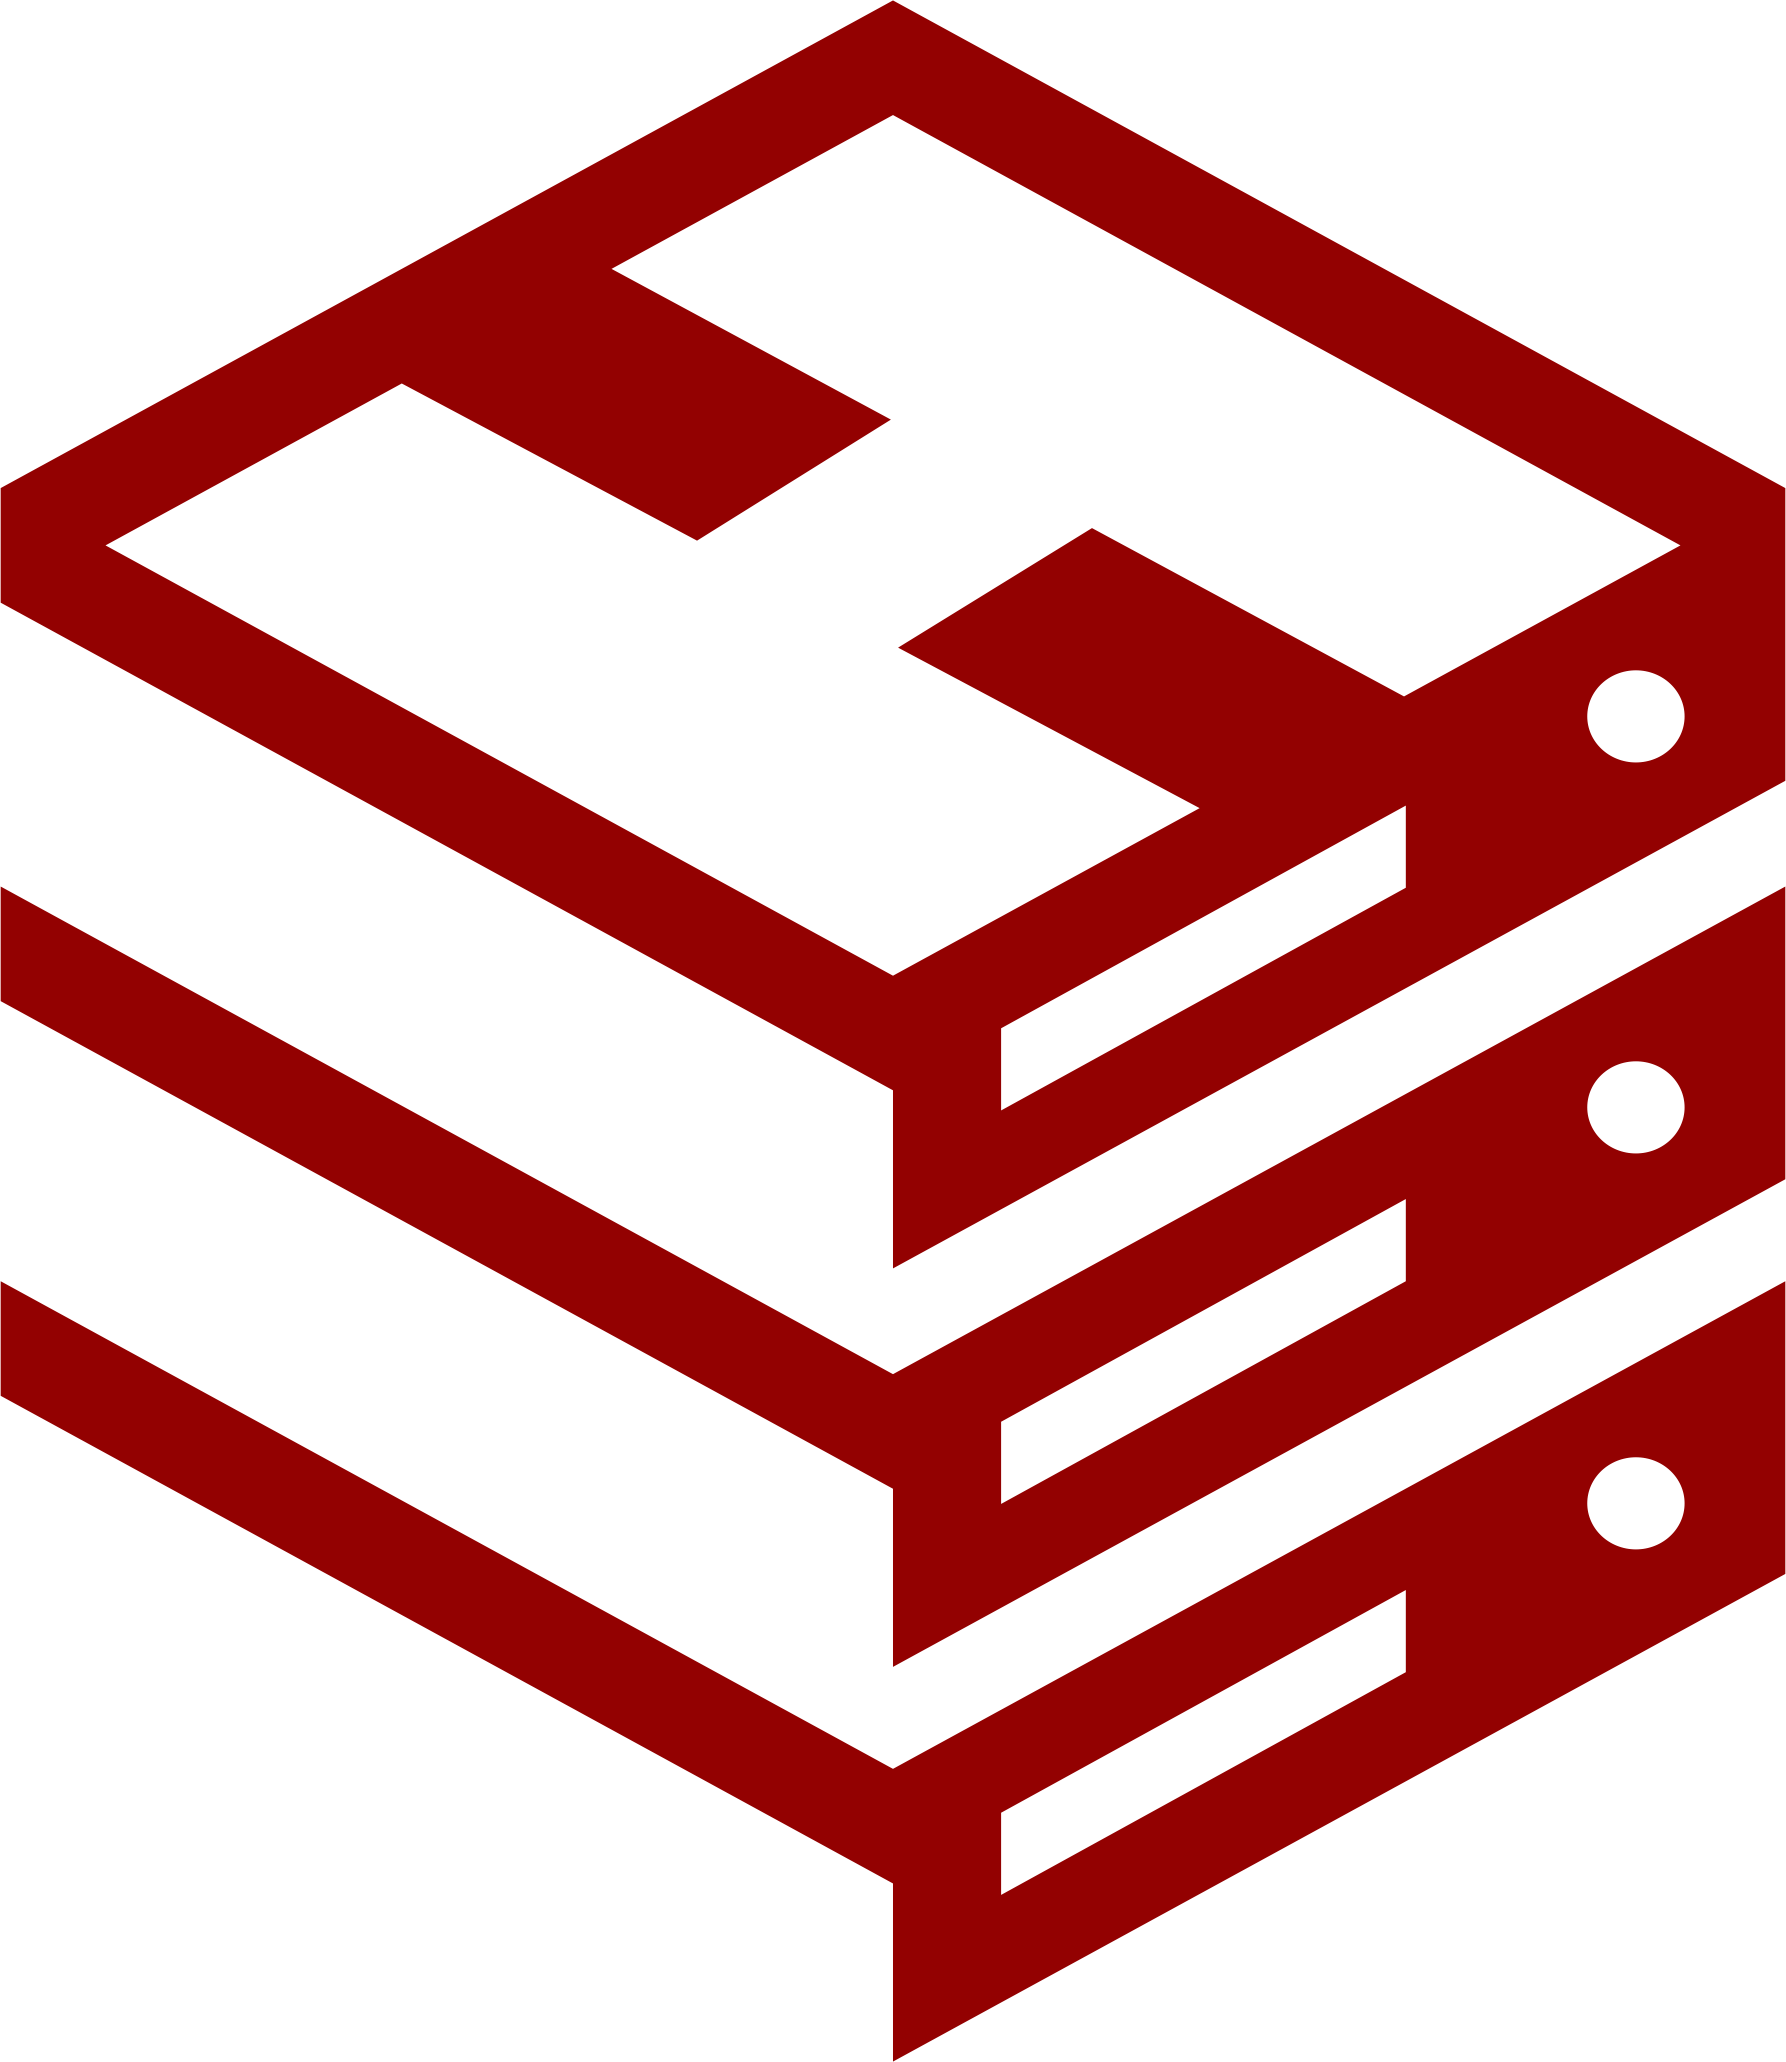 transparent airtable logo